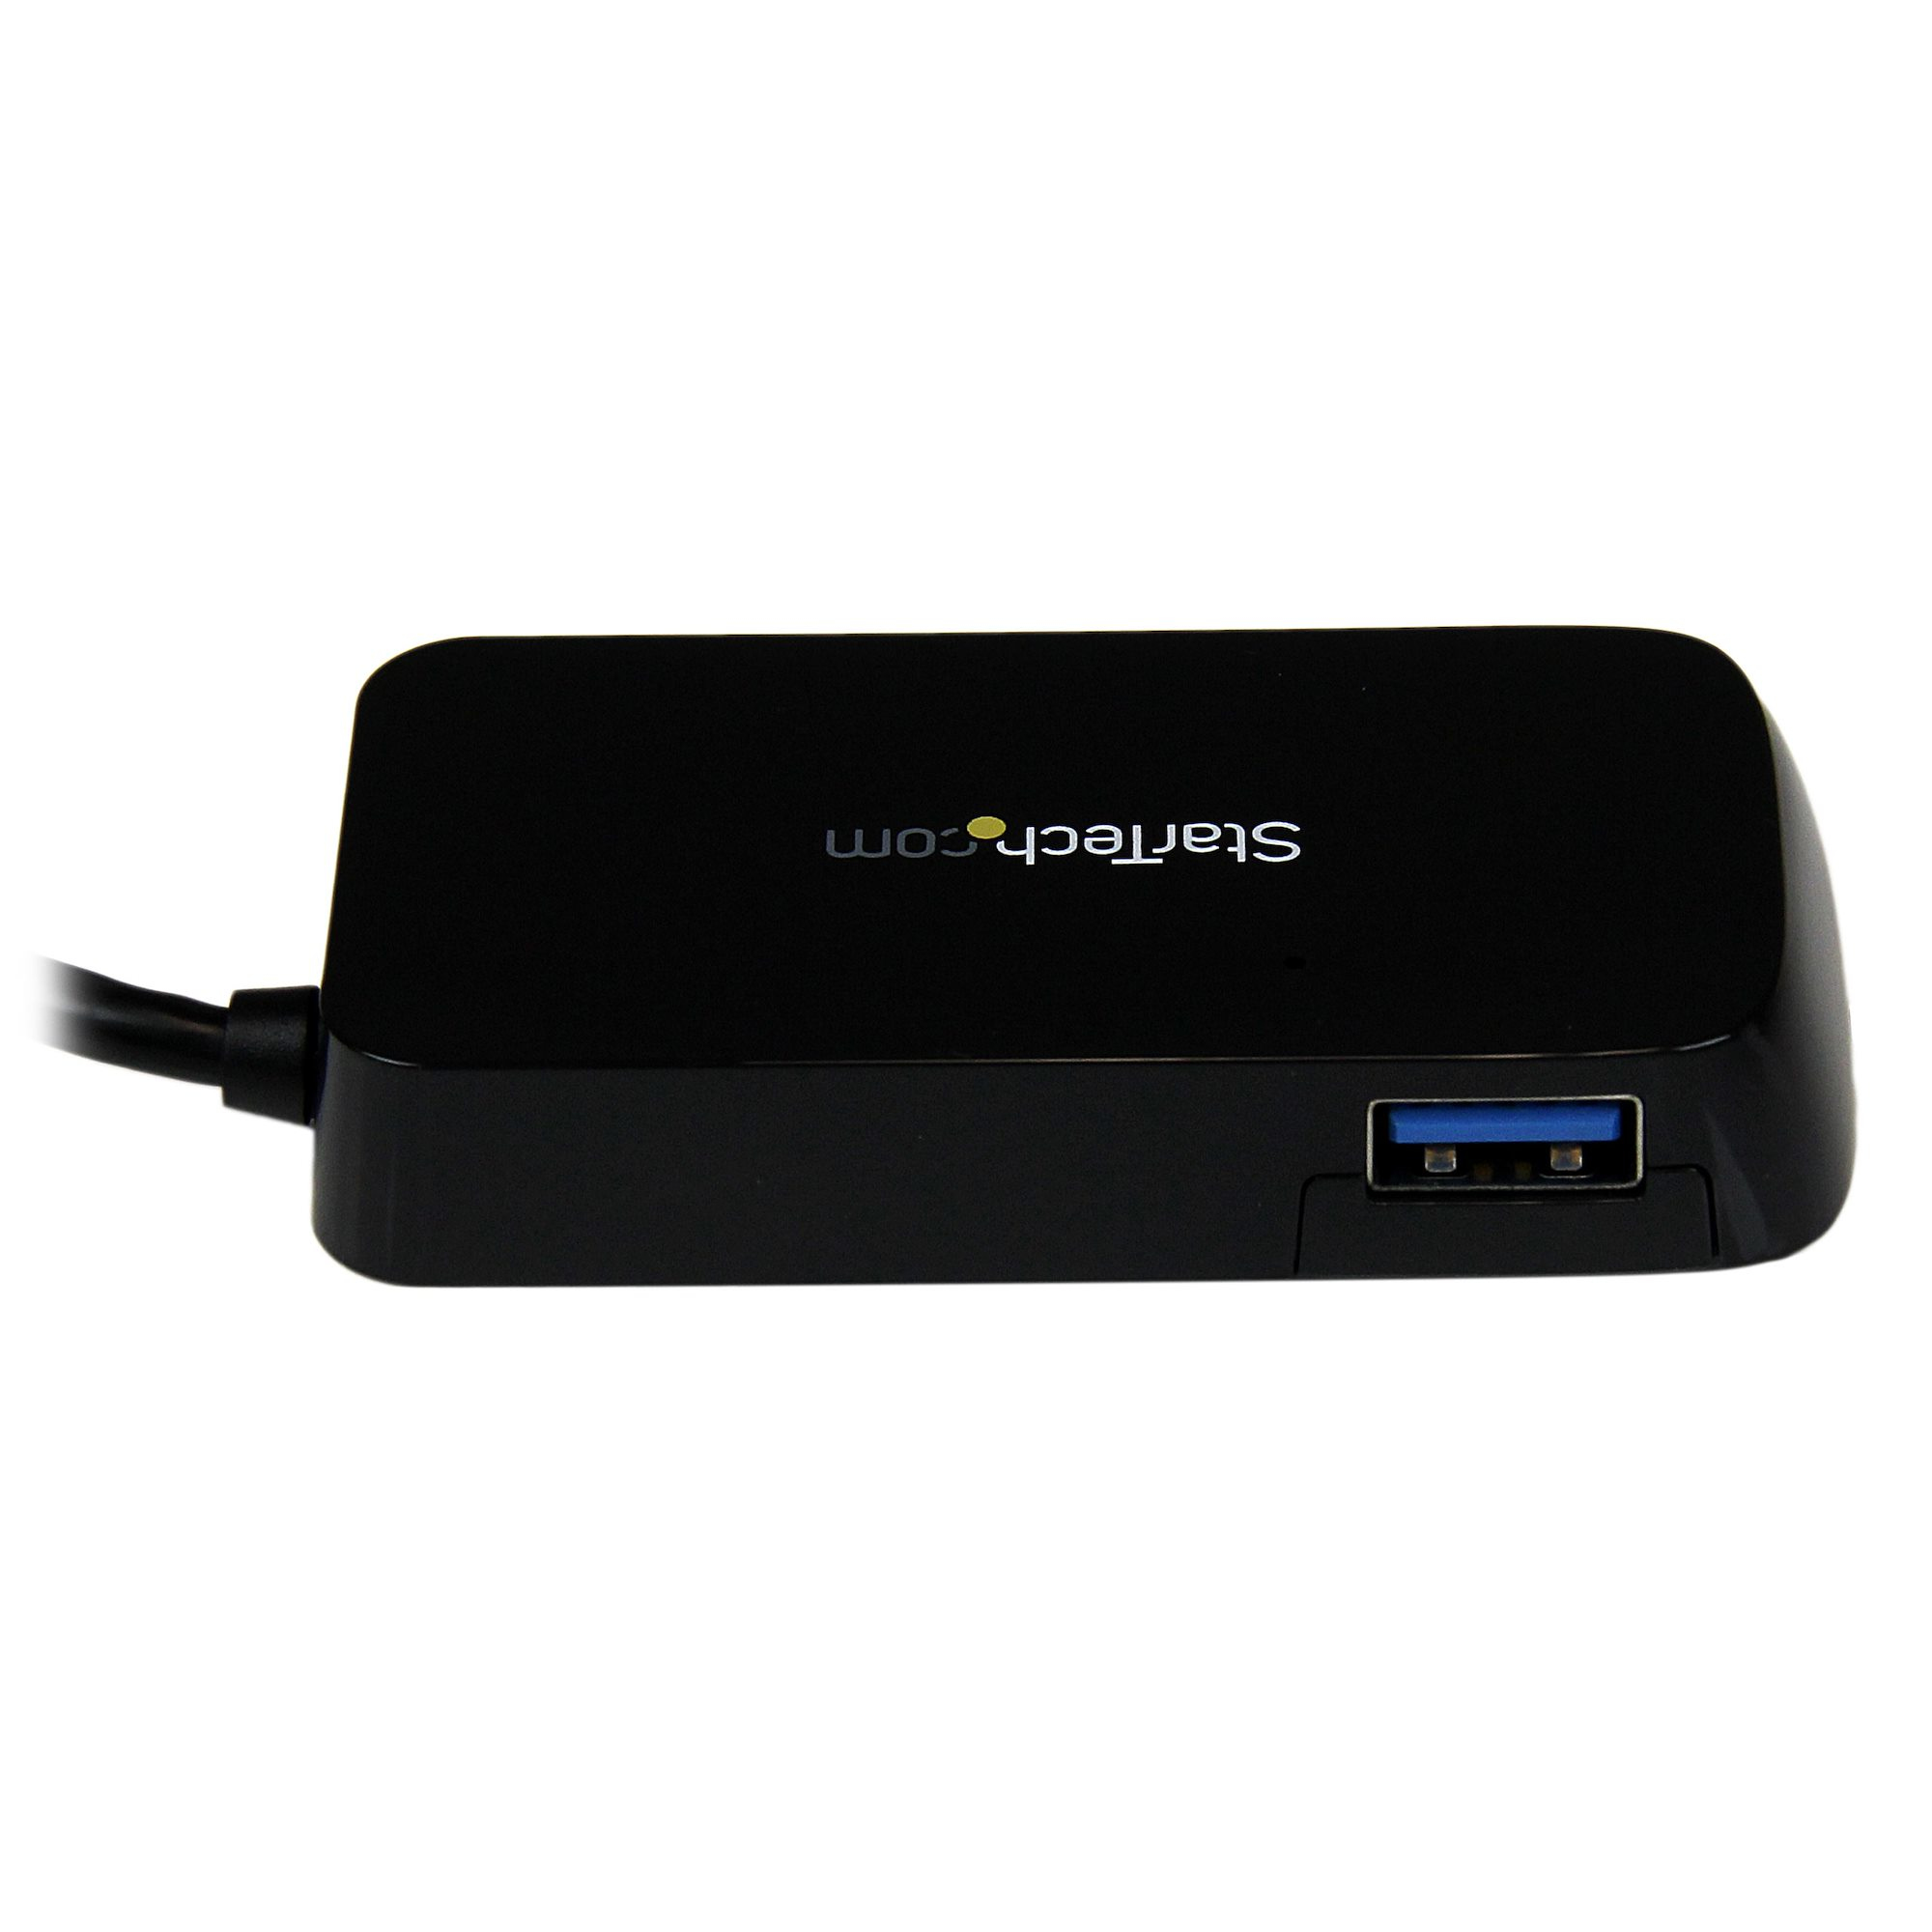 StarTech.com Adaptador Concentrador Hub Ladrón USB 3.0 (5Gbps) Super Speed  Portátil de 4 Puertos Salidas - Negro